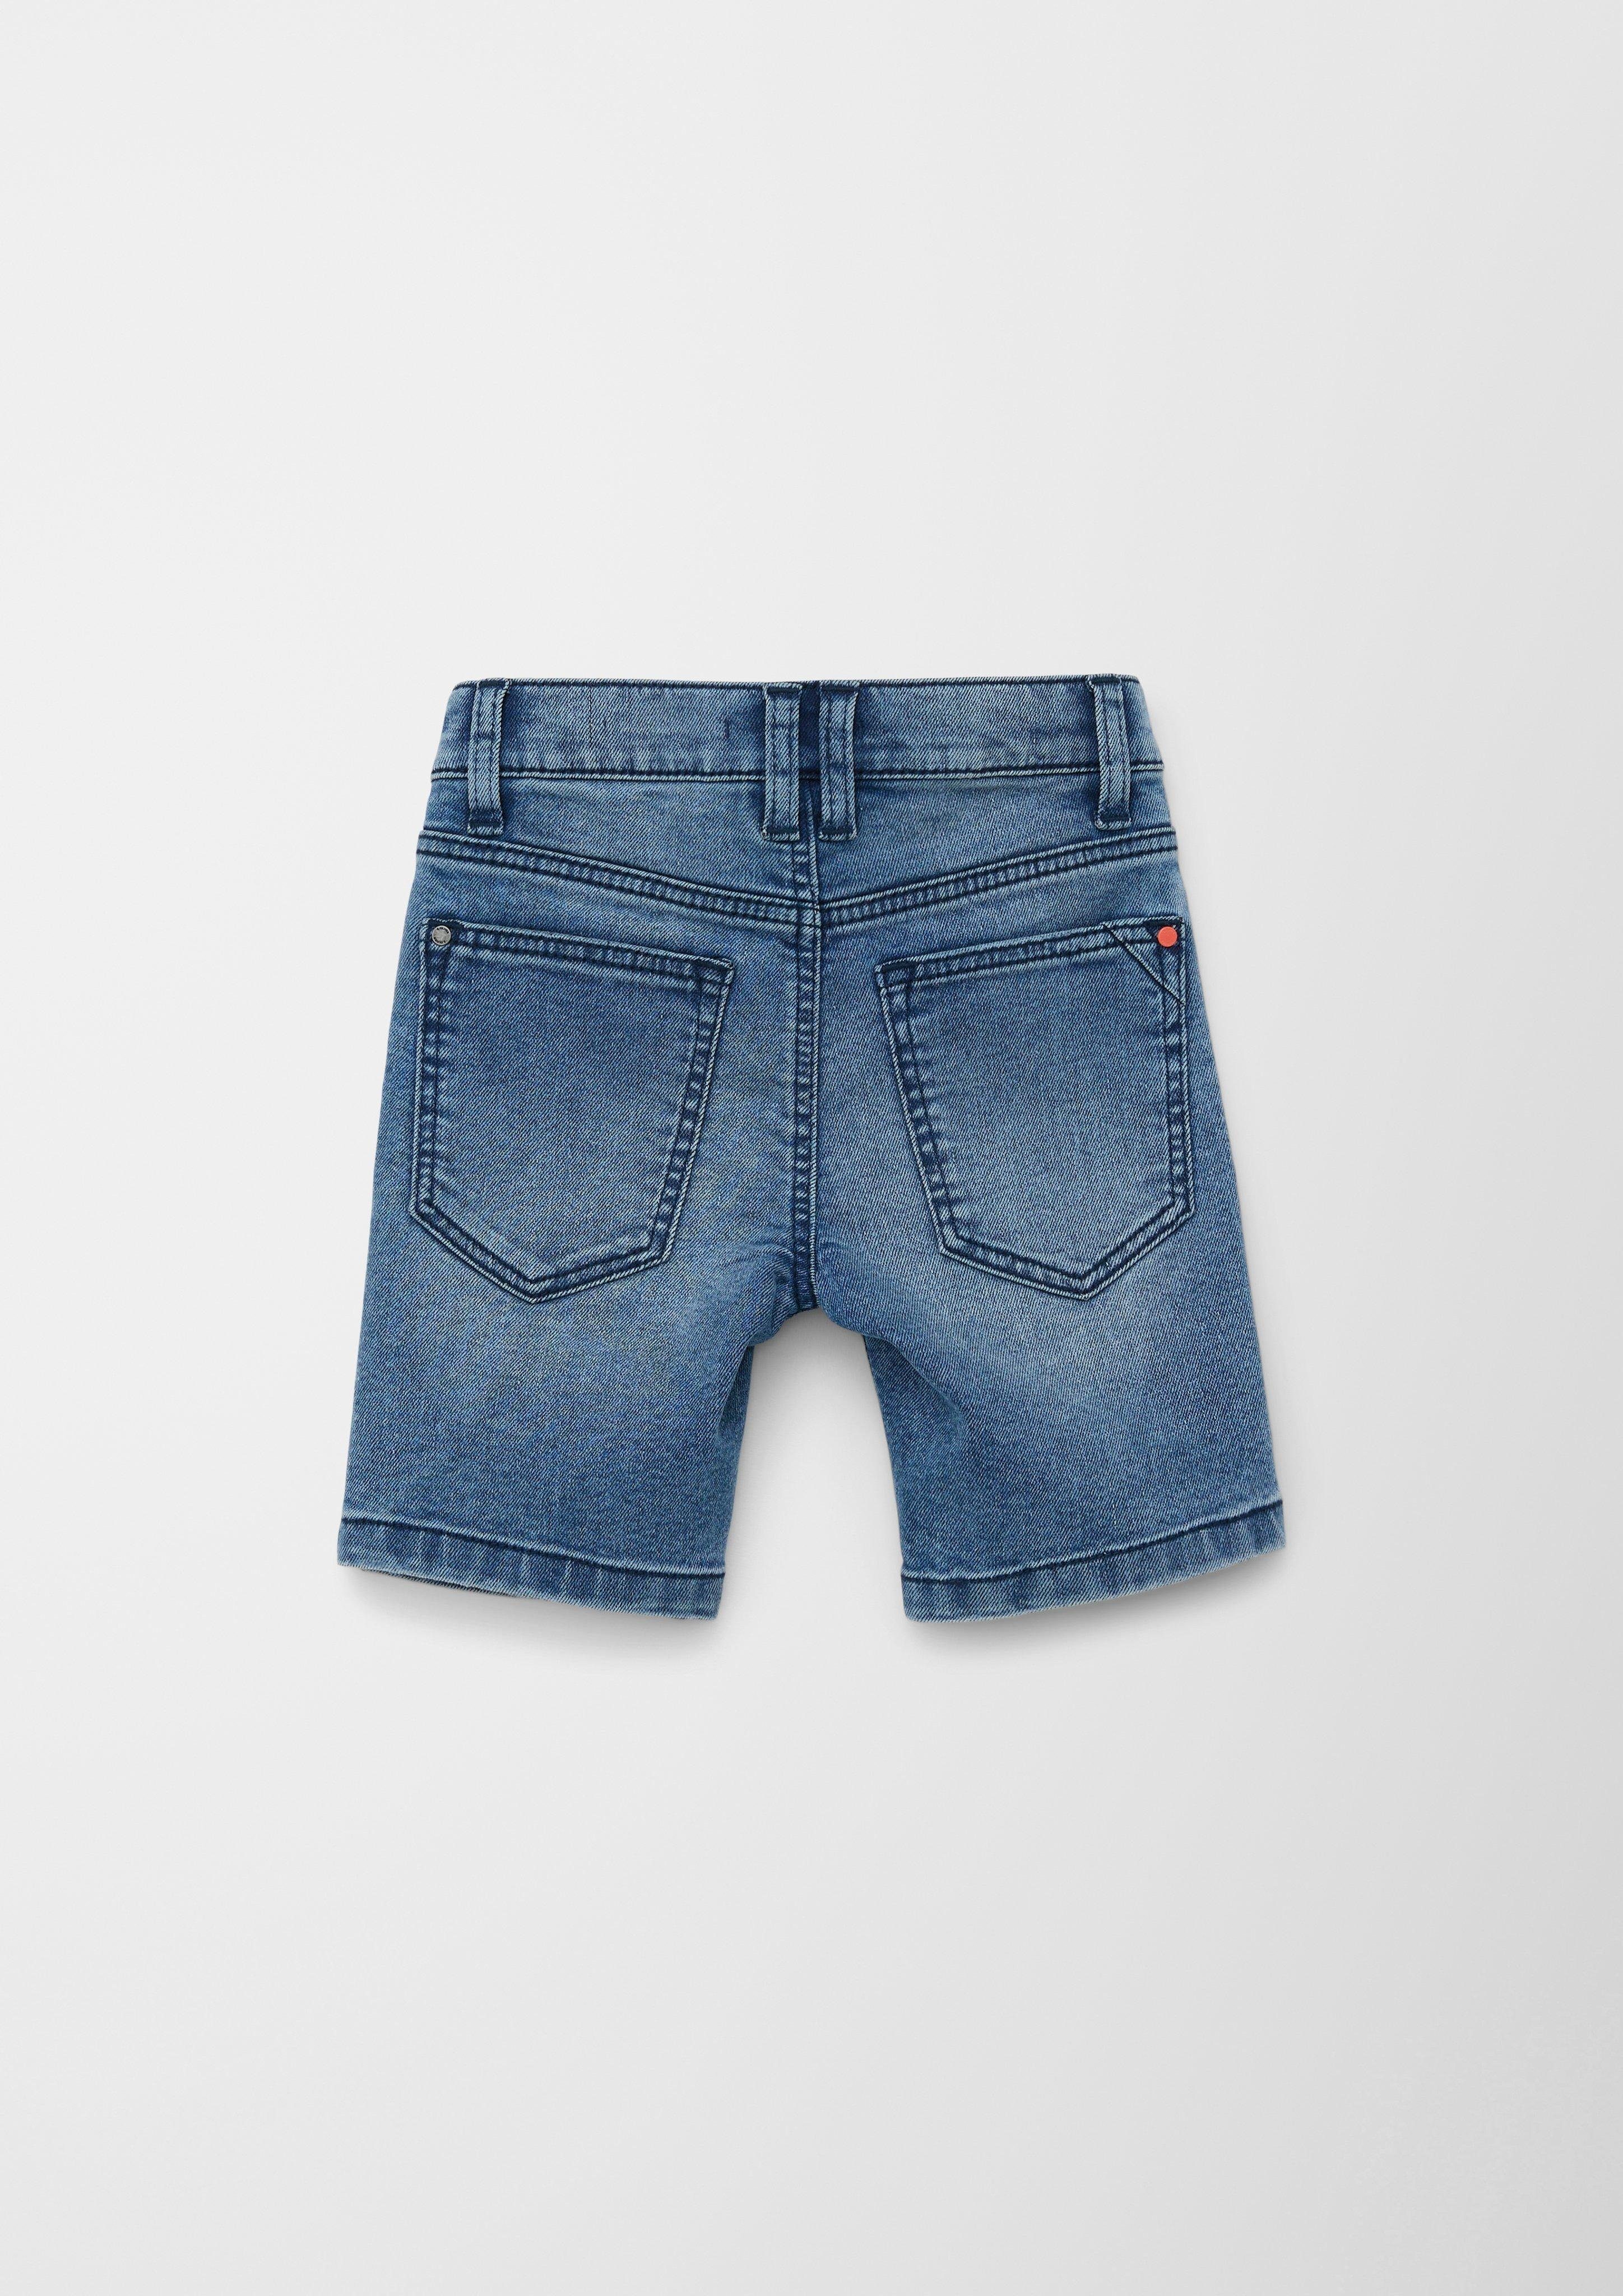 Leg / s.Oliver / Fit Brad / Slim Rise Waschung Slim Jeans-Bermuda Mid Jeansshorts